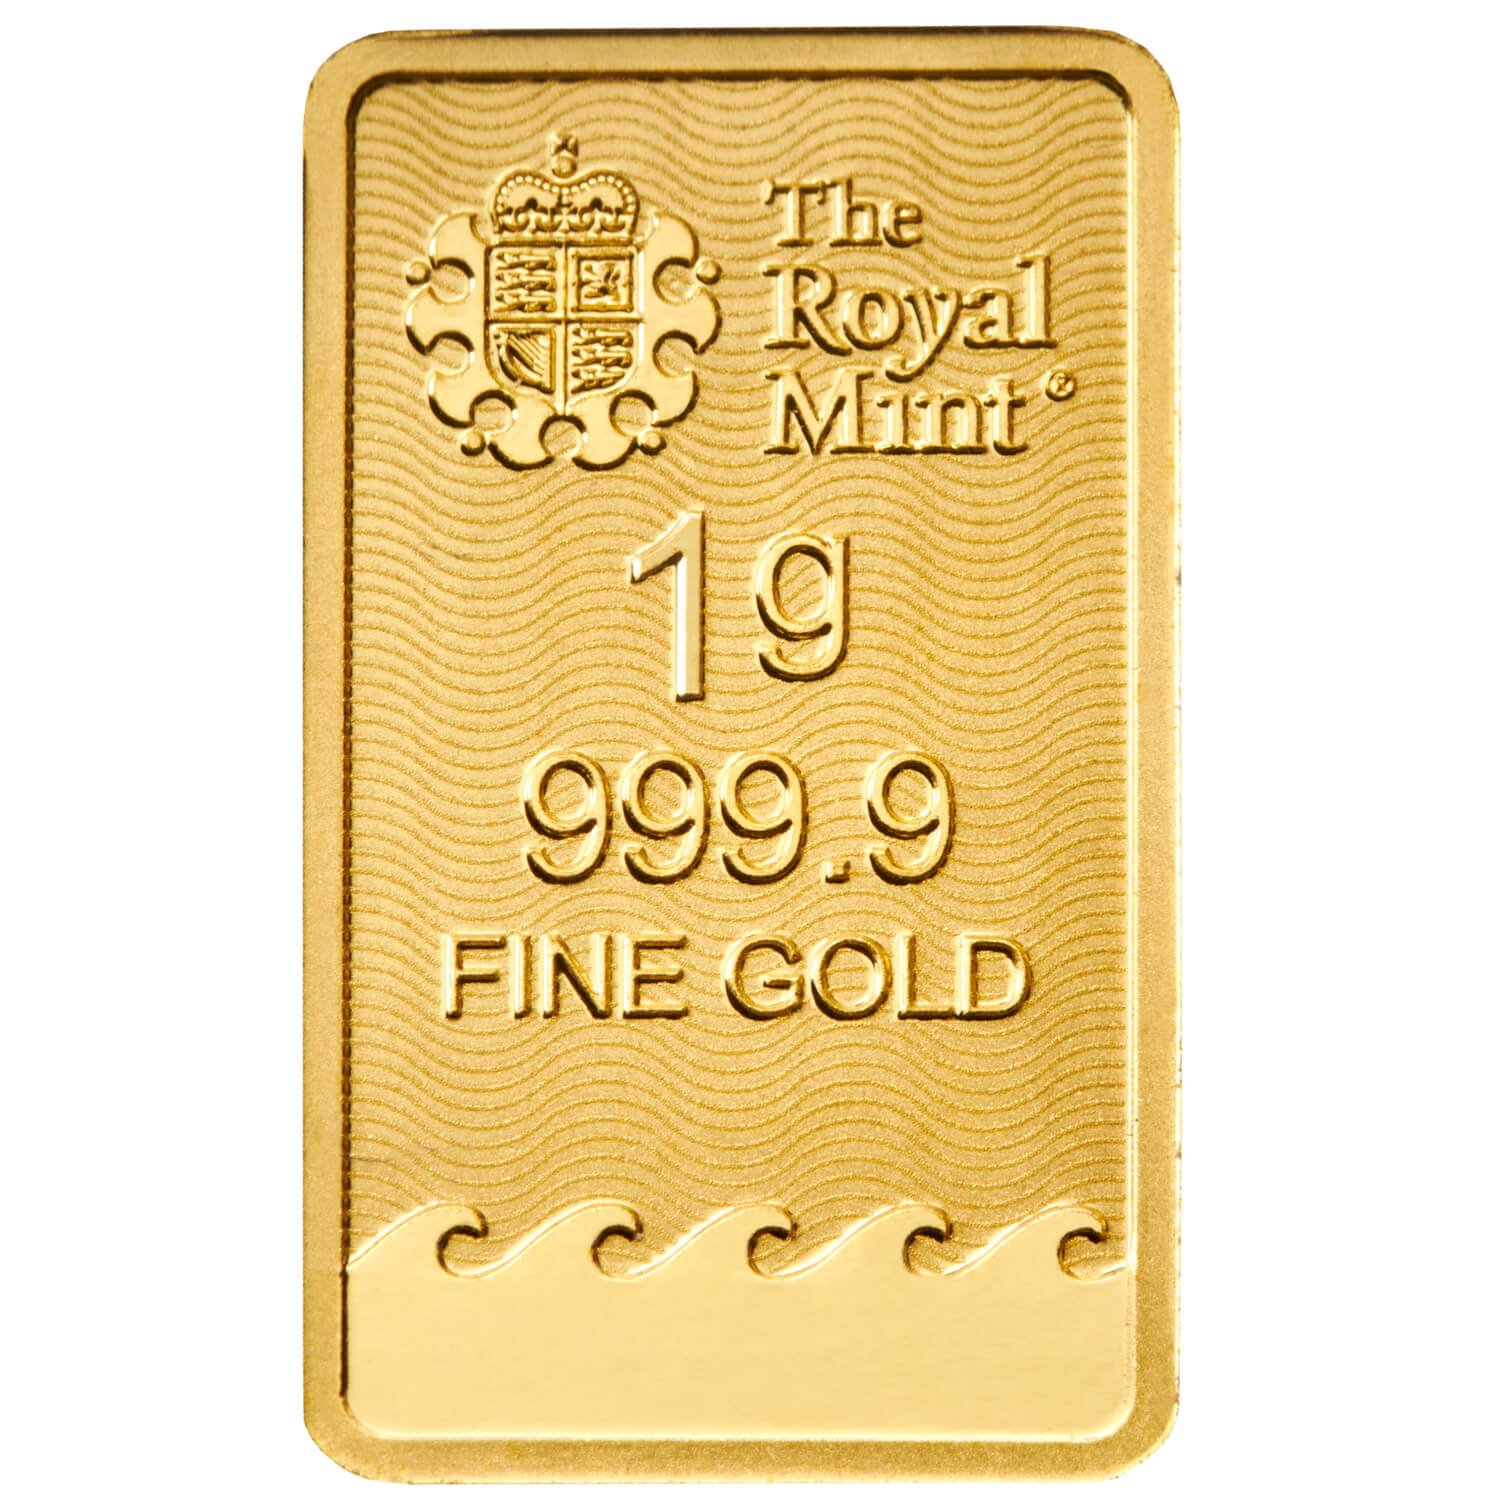 https://www.royalmint.com/globalassets/bullion/images/products/britannia/brit-bars/britannia-bar-minted-gold-1g---rmr18850-side-2-1500x1500-f3a2c67.jpg